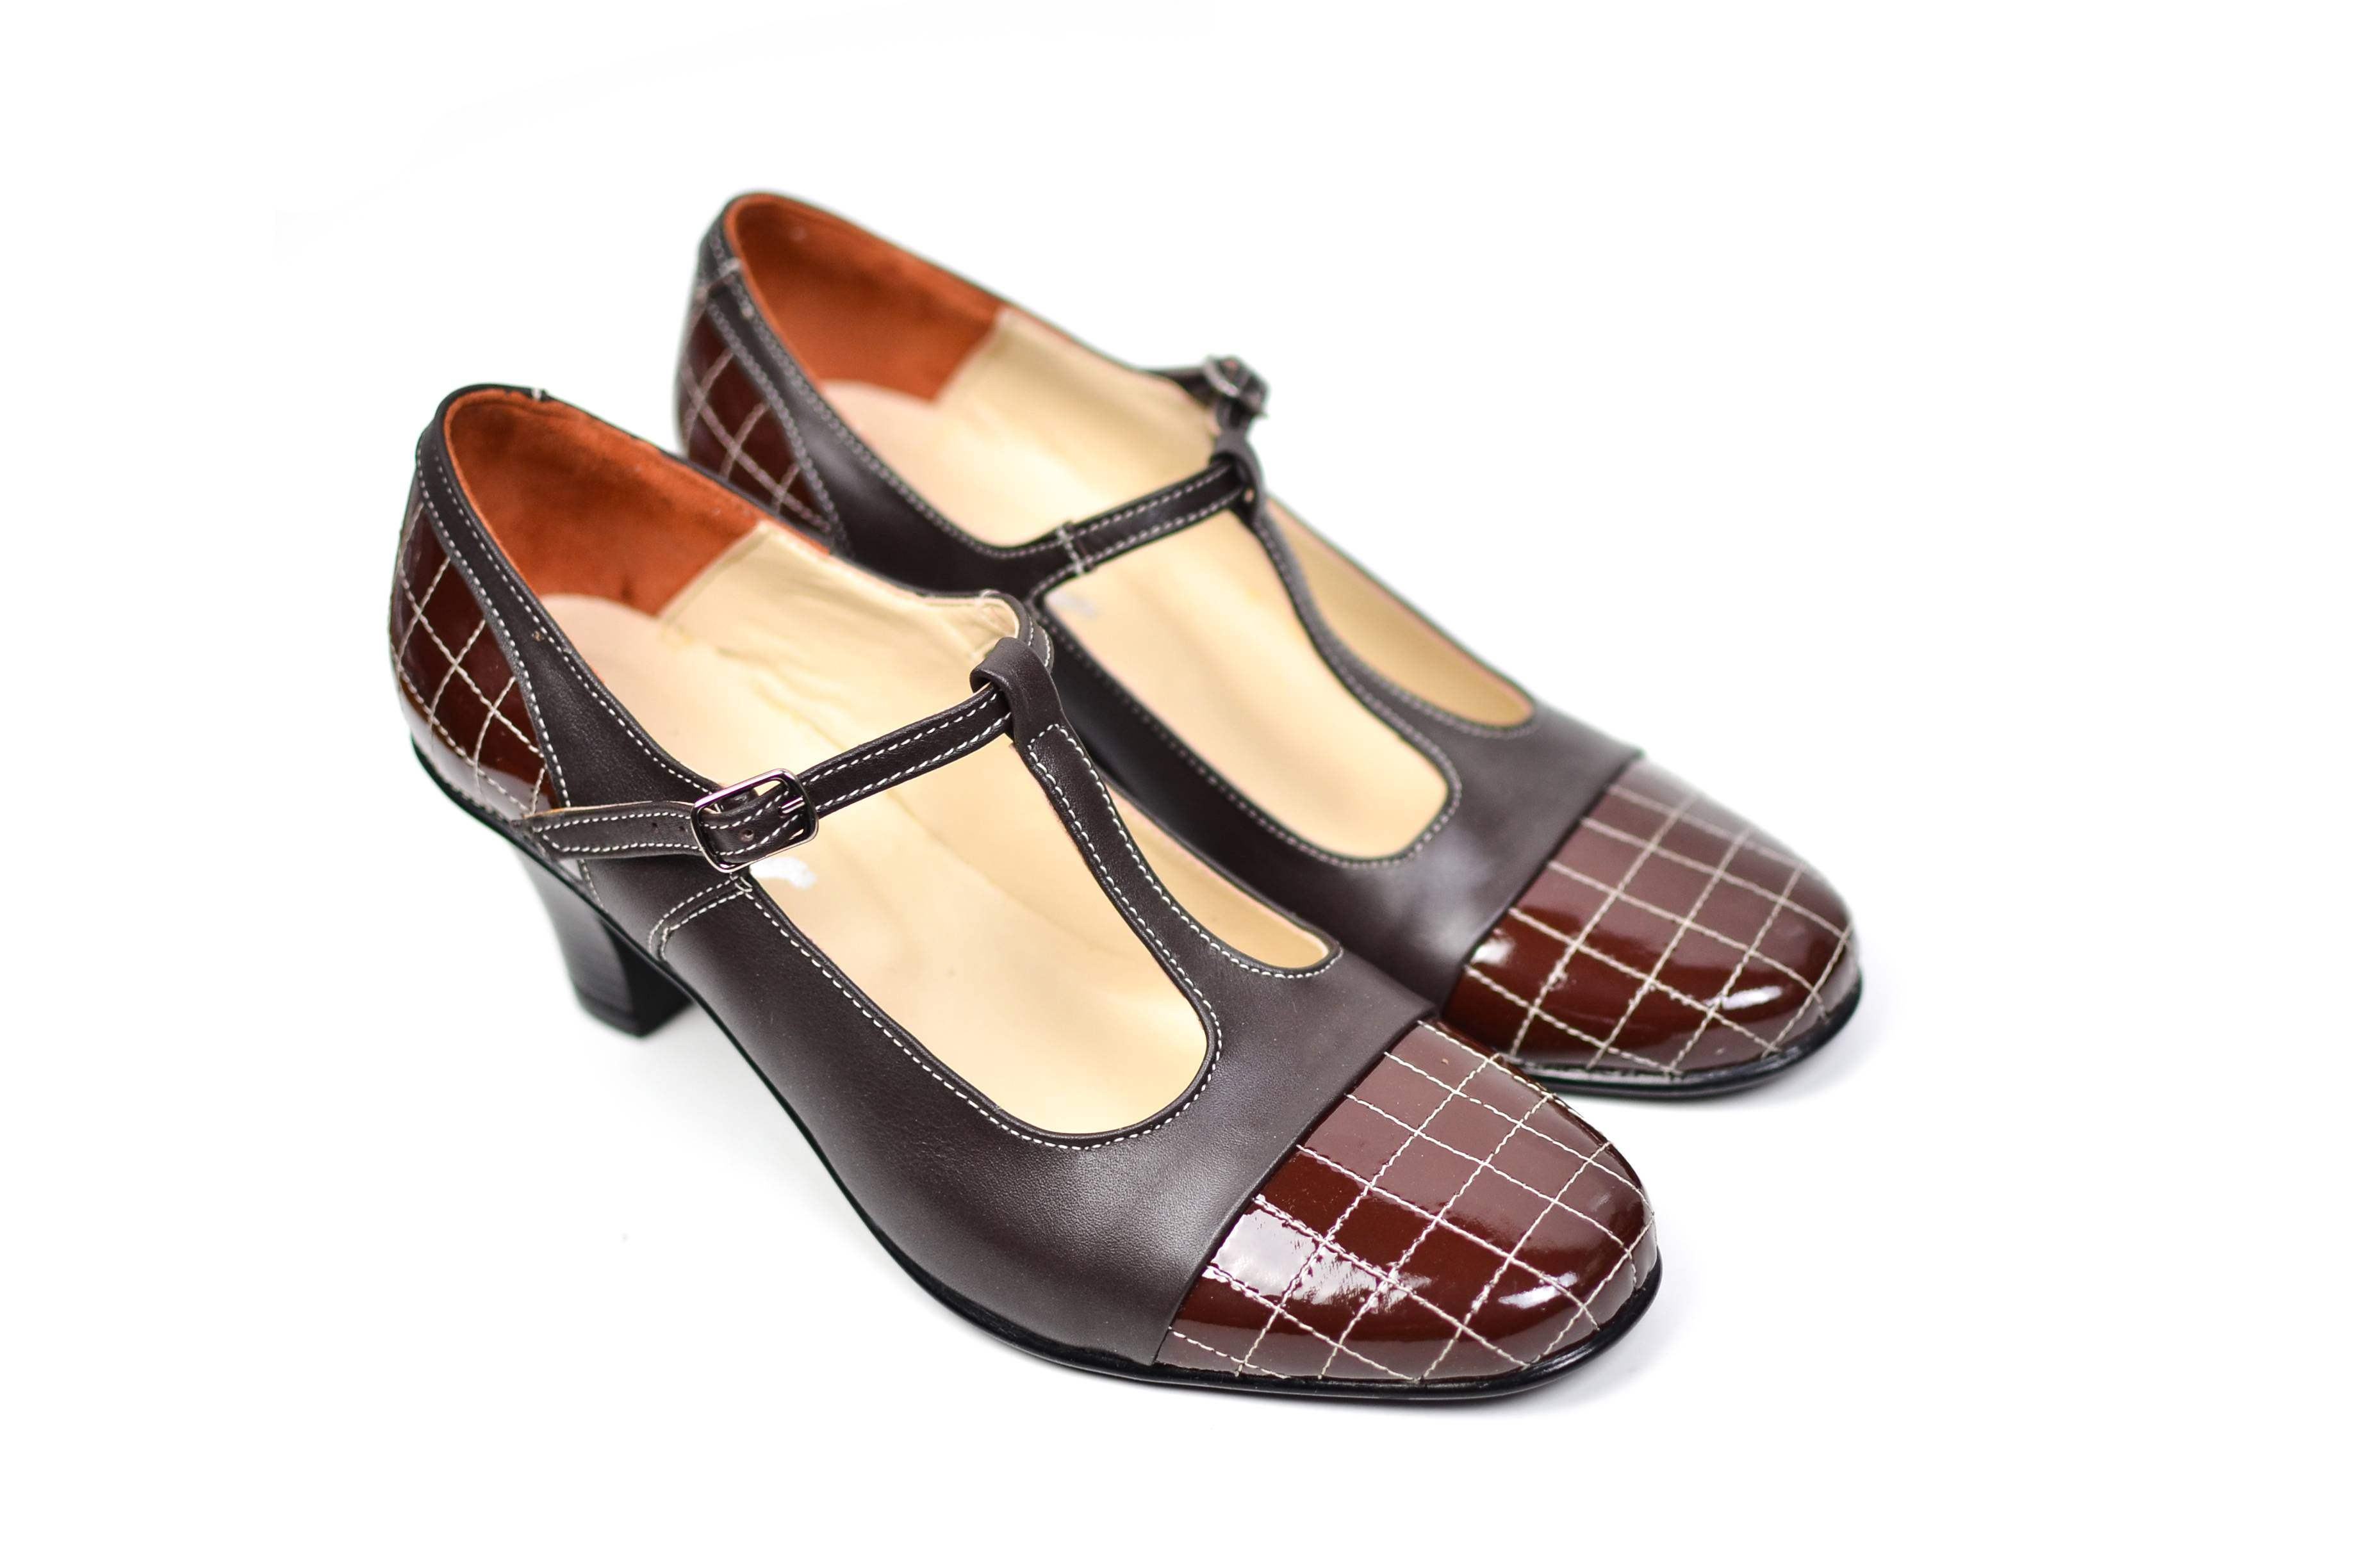 Pantofi dama piele naturala cu varf lacuit - eleganti - Made in Romania P50M